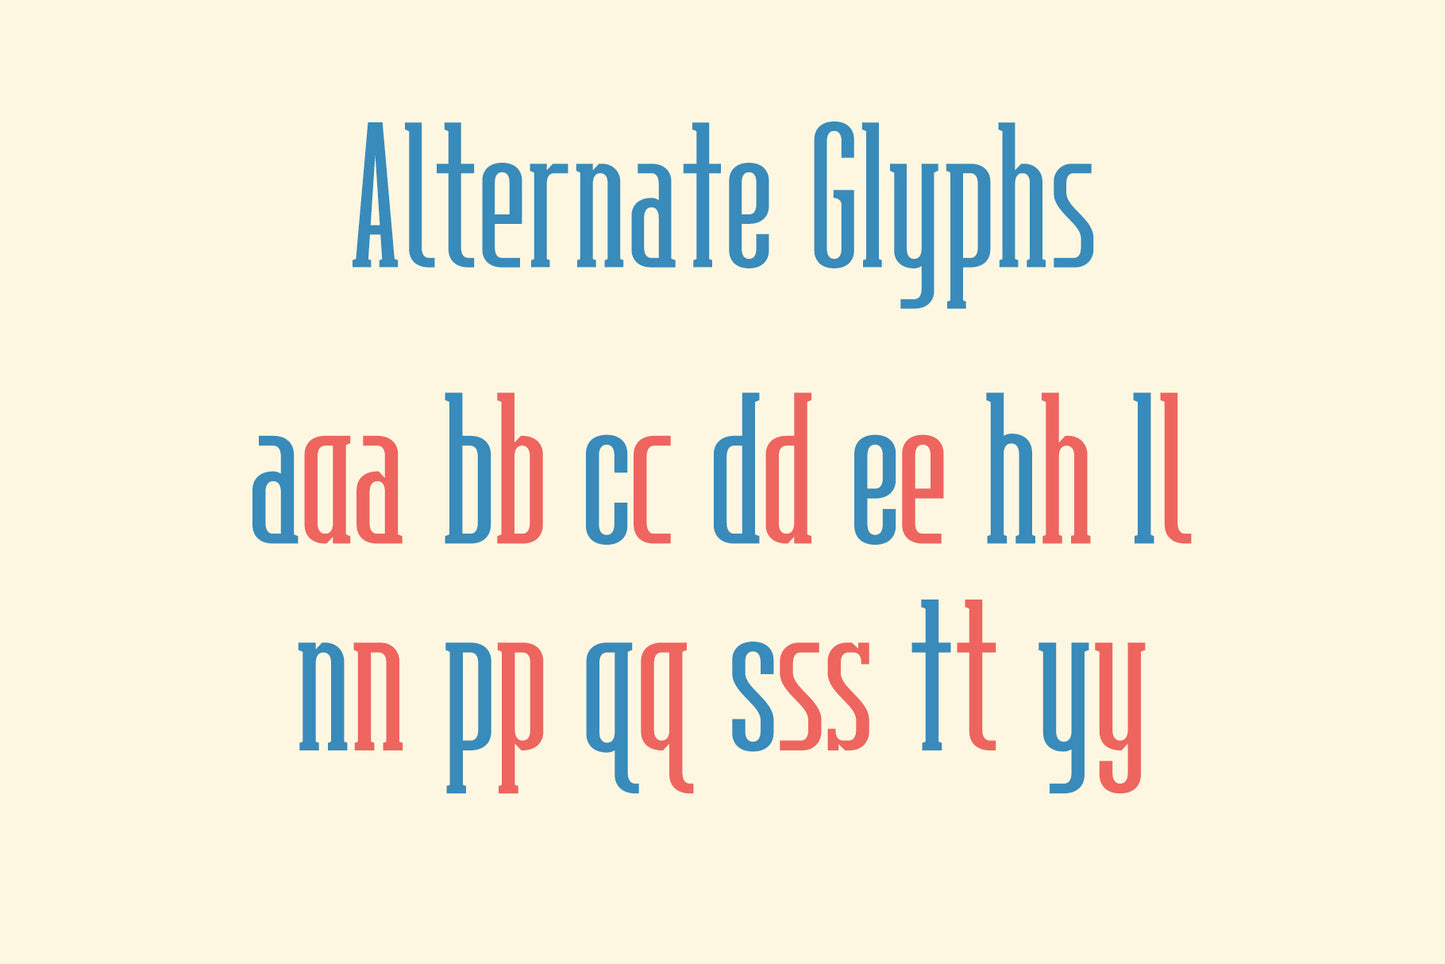 Executor Typeface